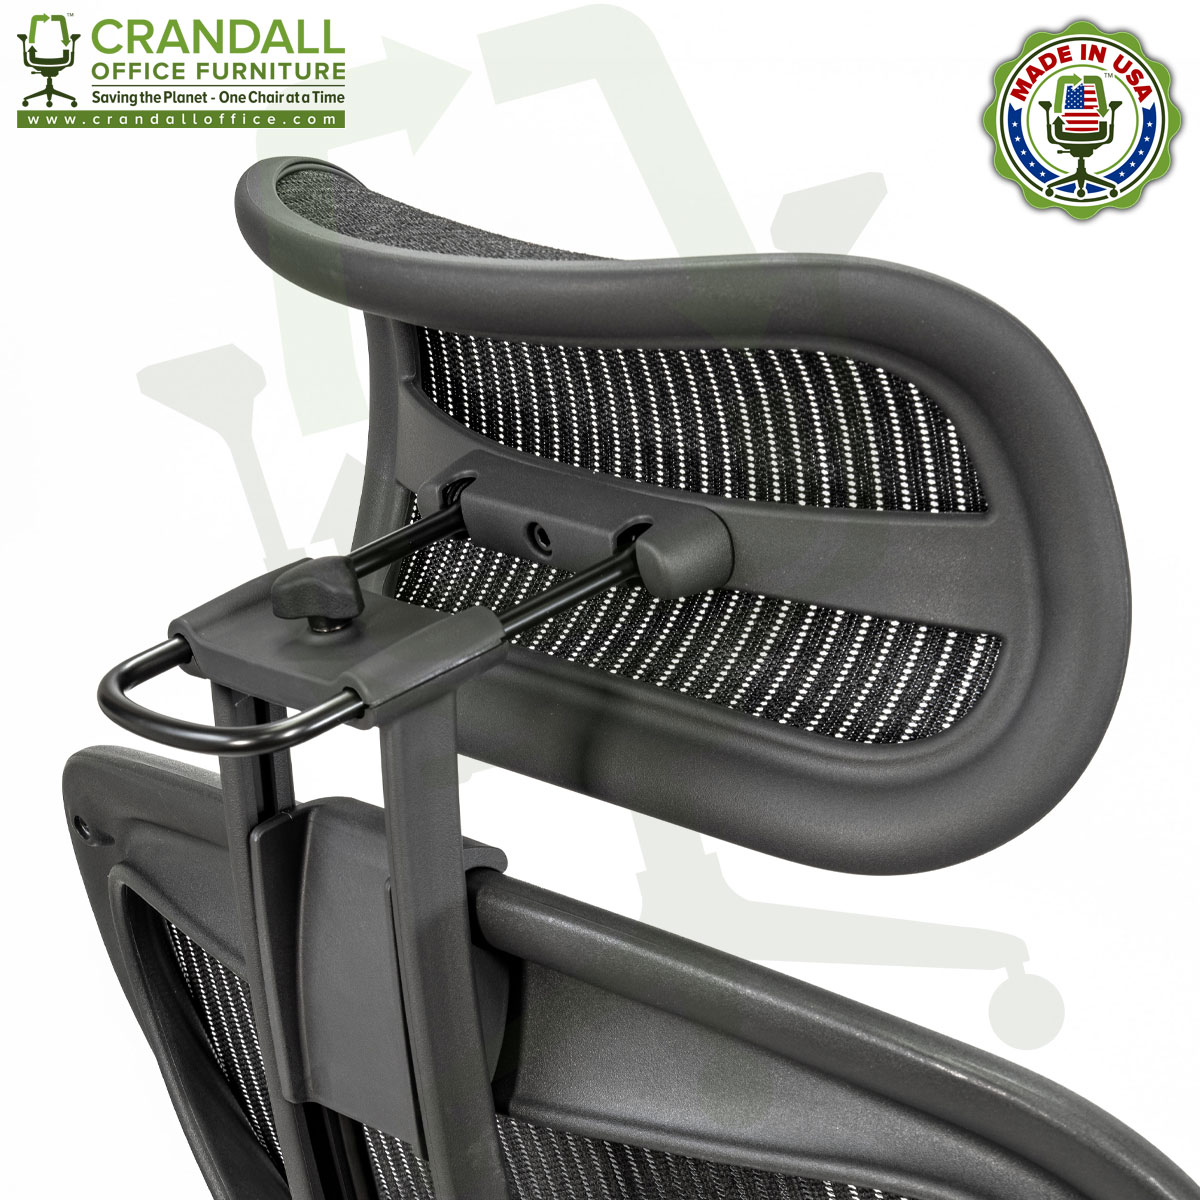 Isse Lokomotiv Vedholdende Atlas Suspension Headrest for Herman Miller Aeron Classic Chair - Crandall  Office Furniture